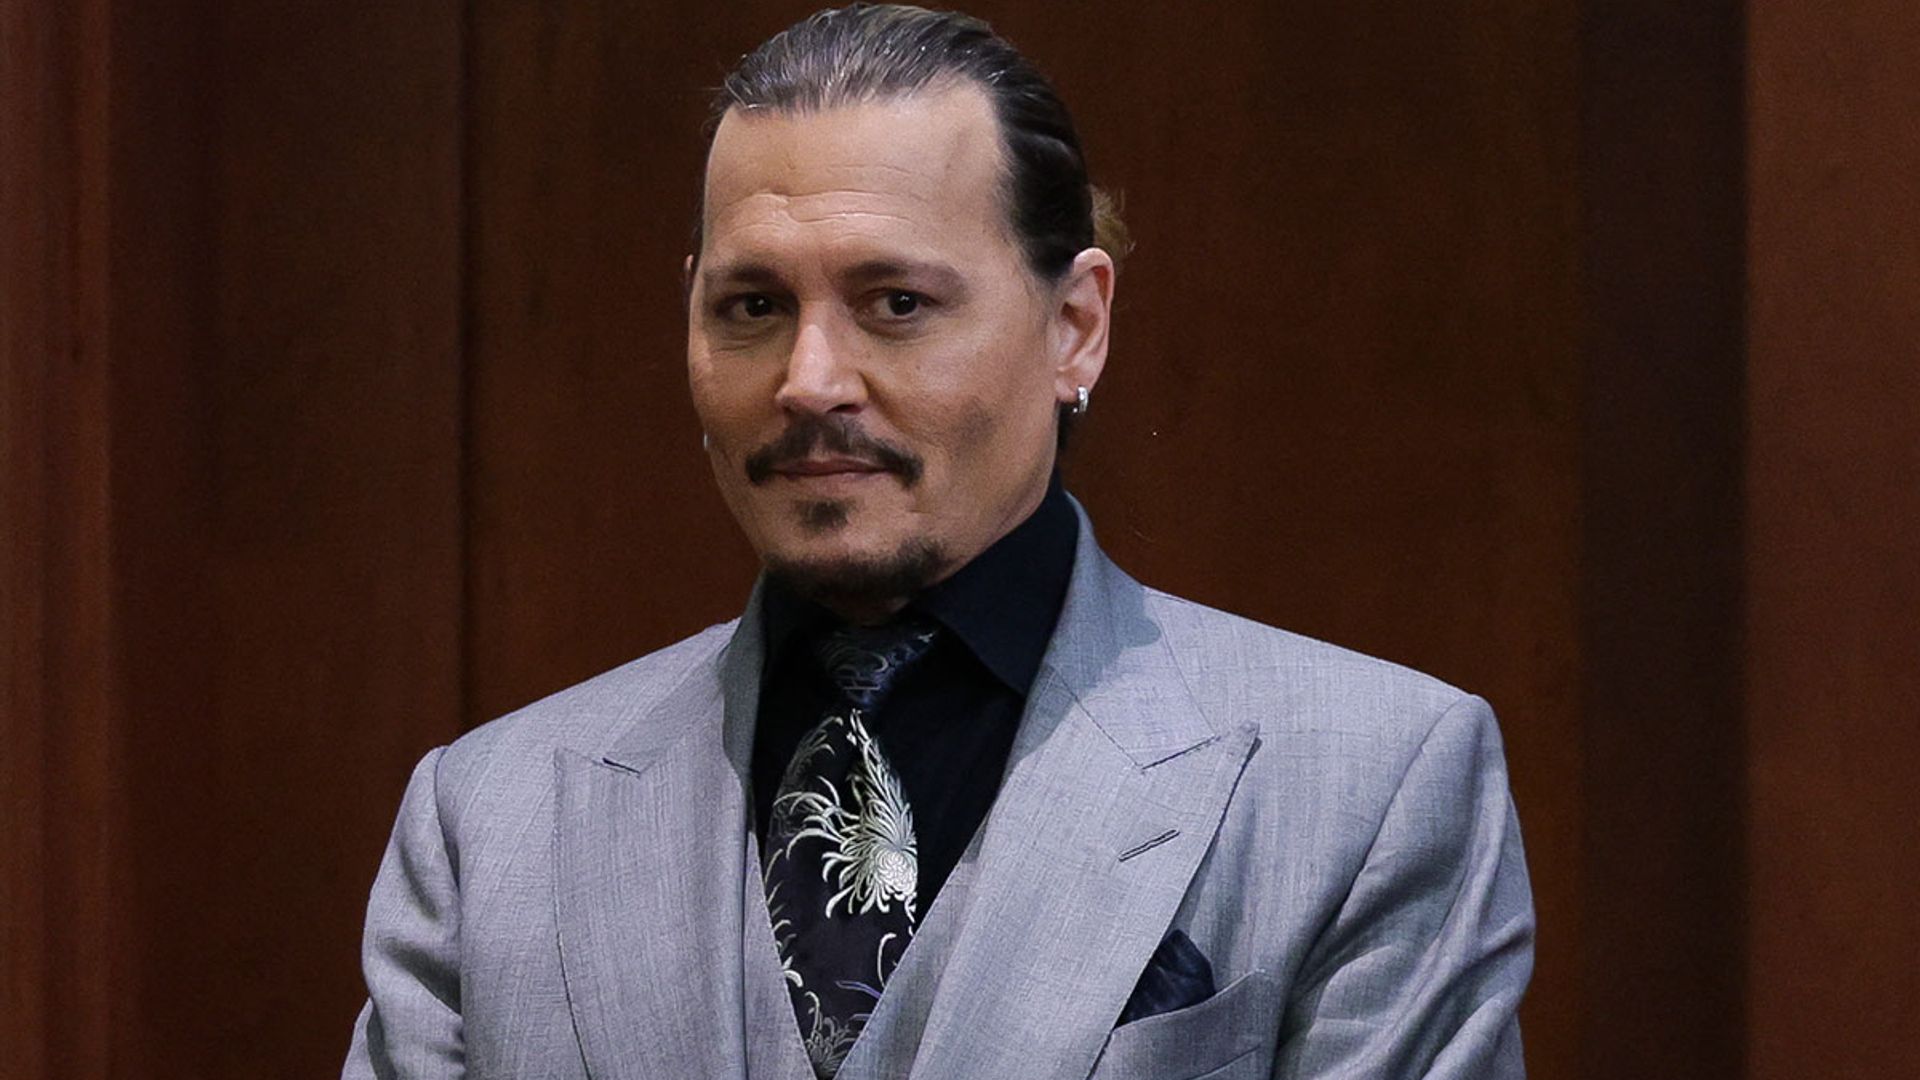 Johnny Depp's modest childhood home in Florida revealed